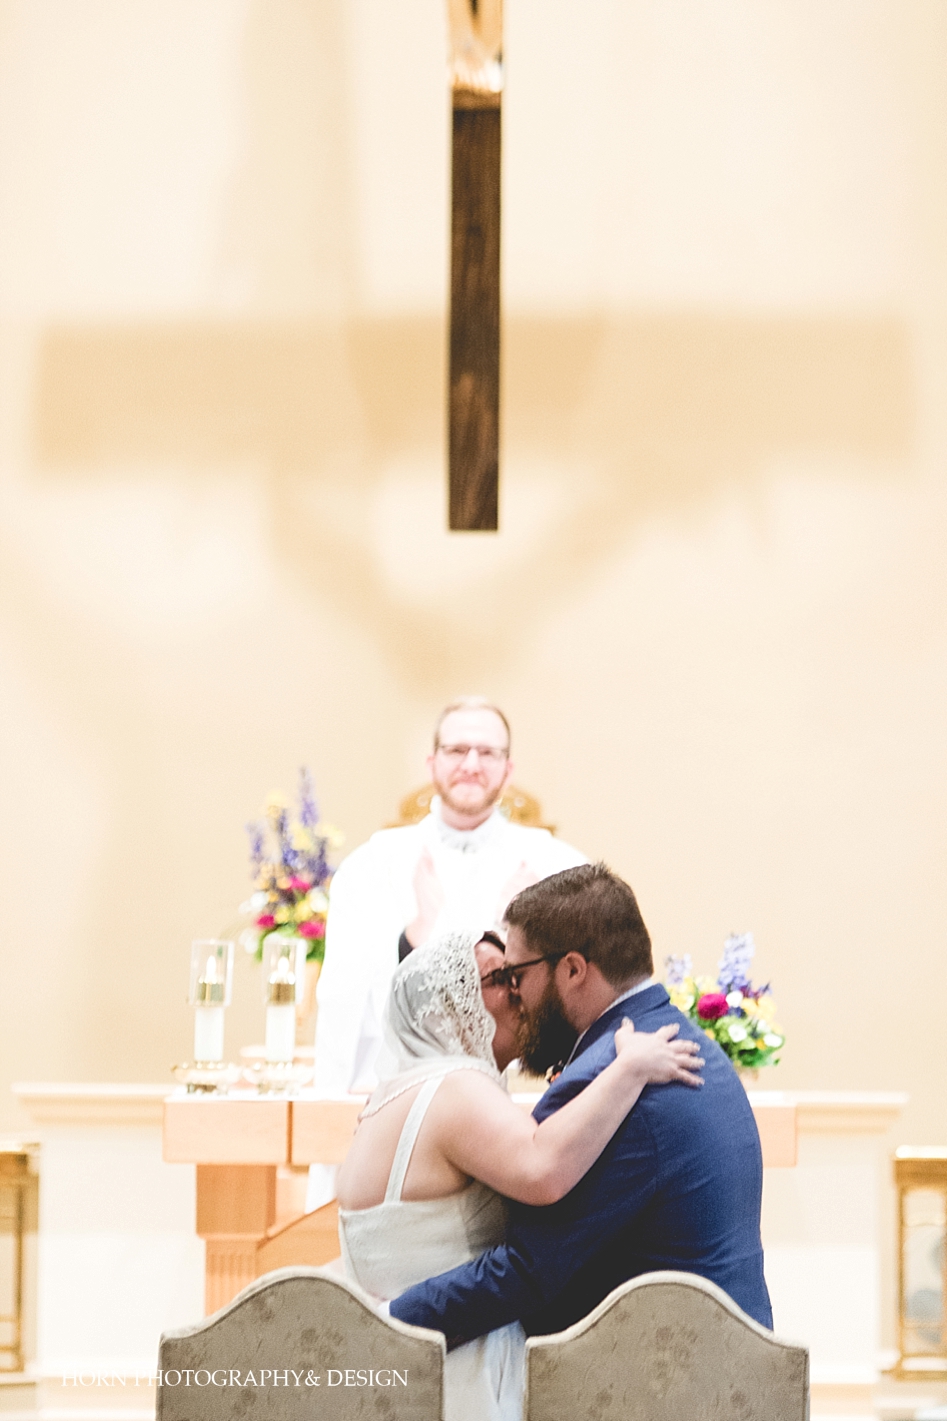 first kiss at catholic wedding horn photography and design catholic photographers